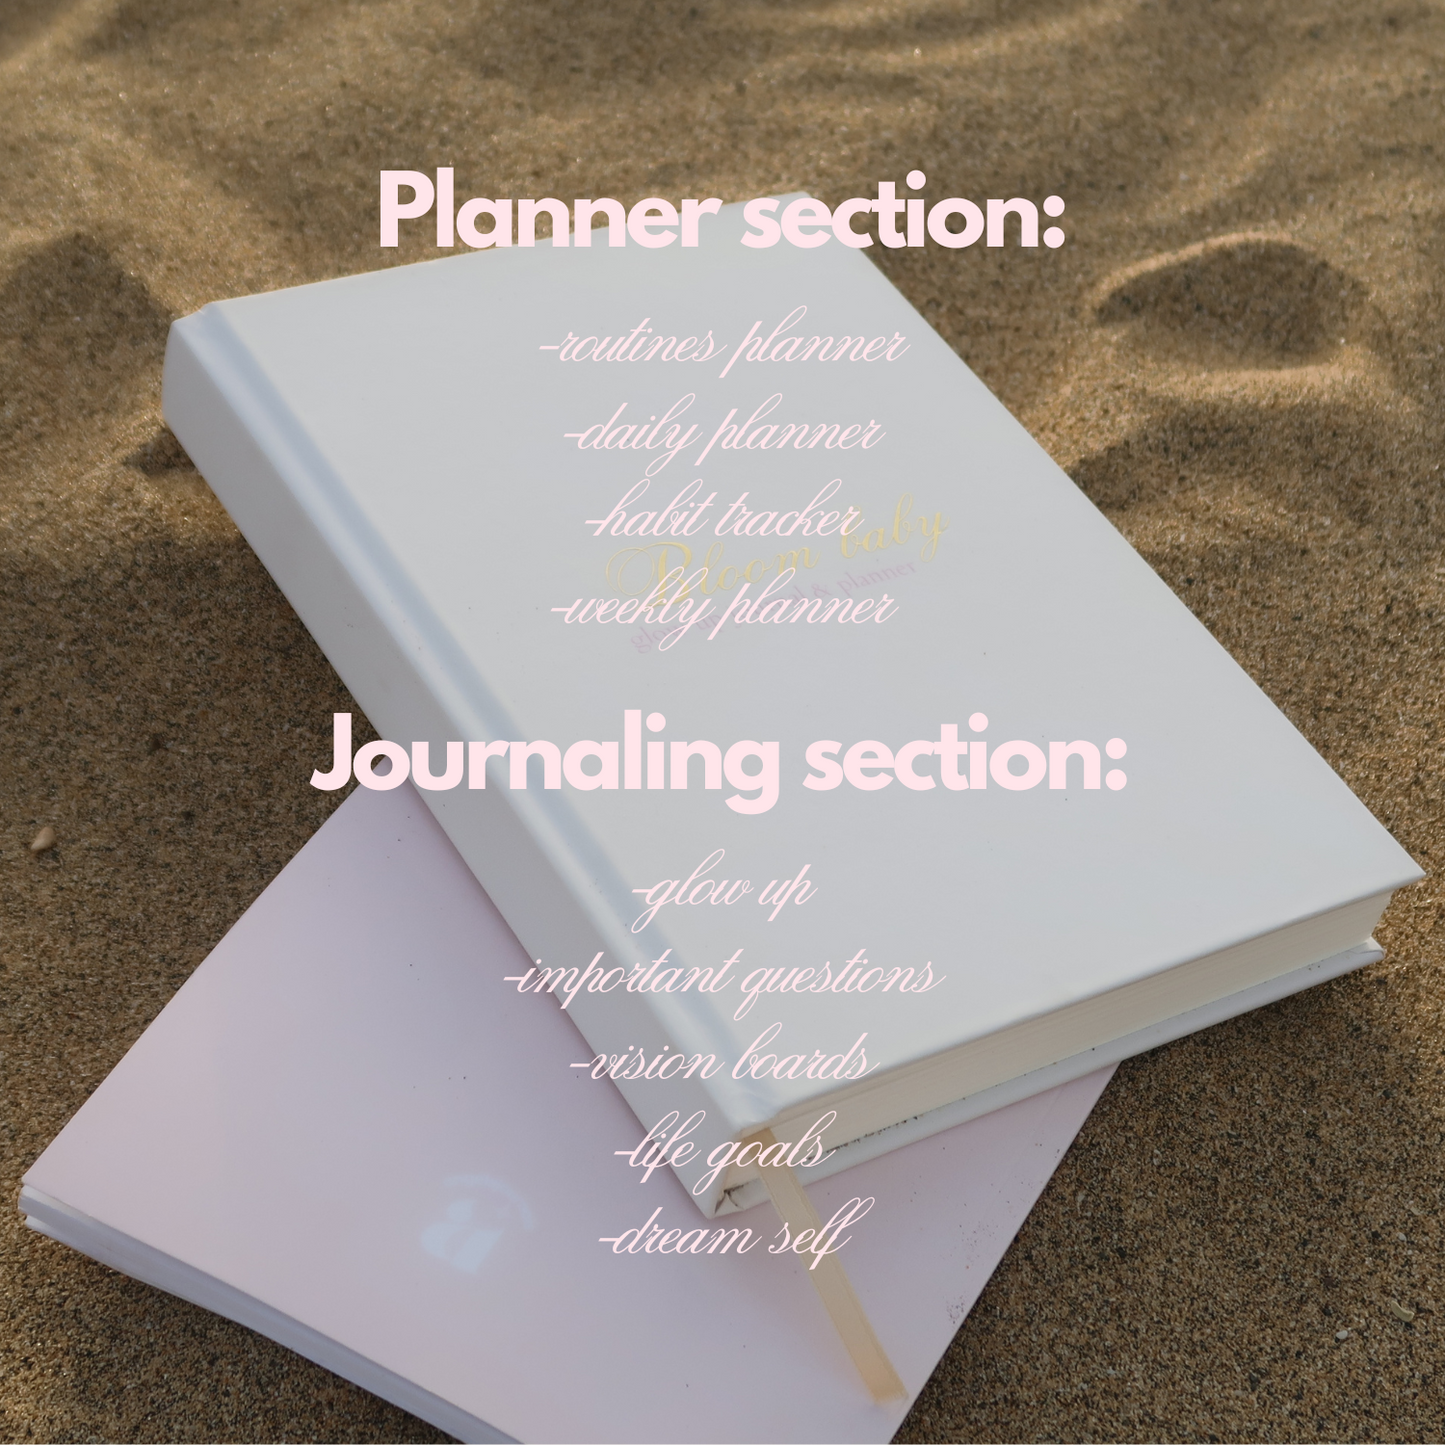 Glow up journal & planner